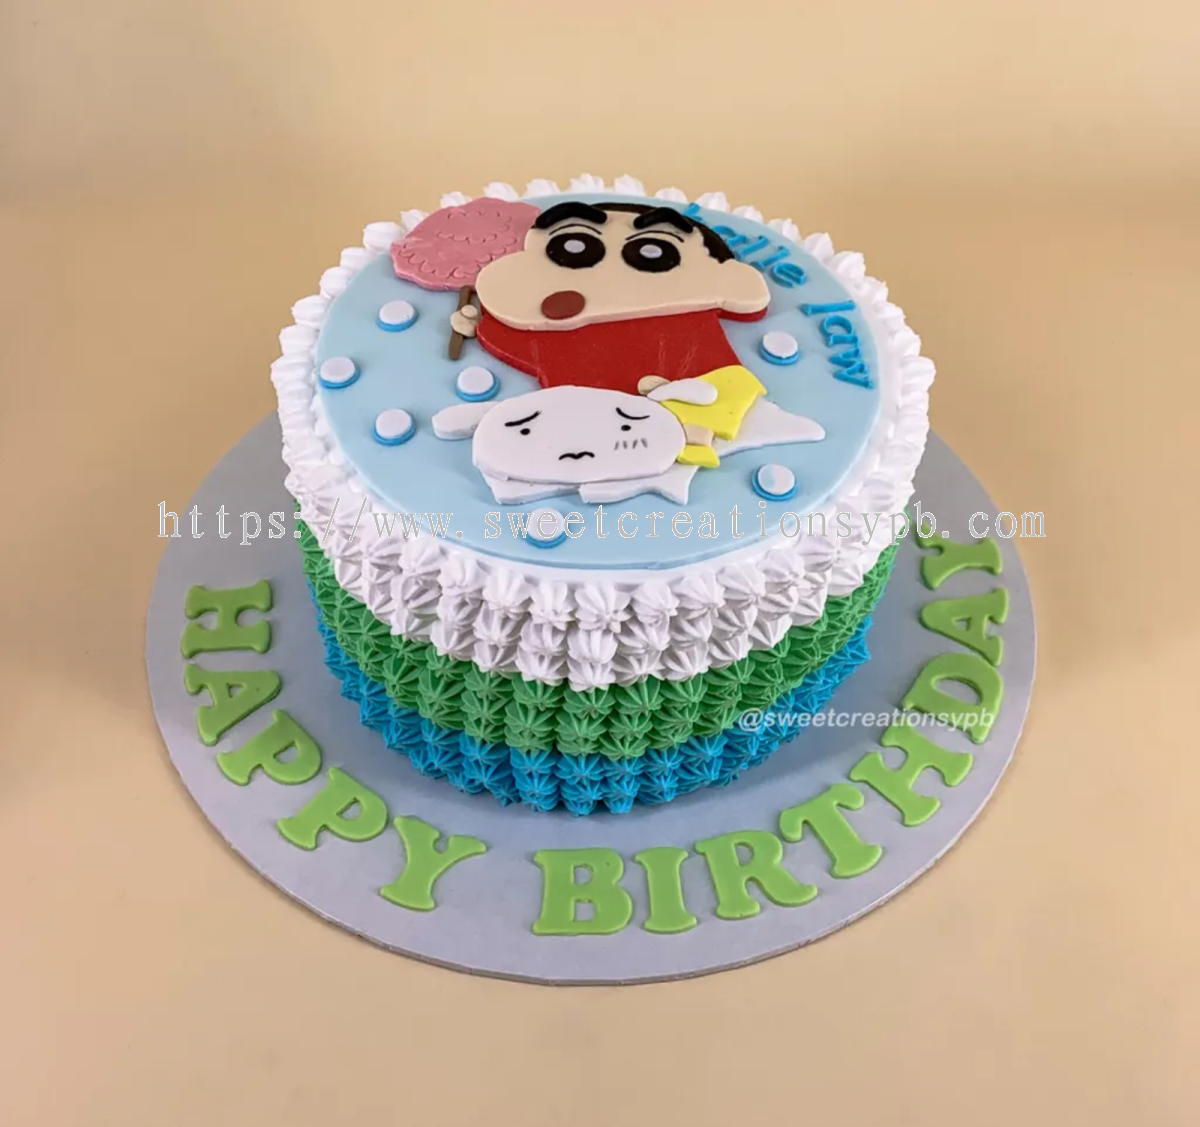 Shincake Cake: Buy Shinchan Birthday Cake Design Online